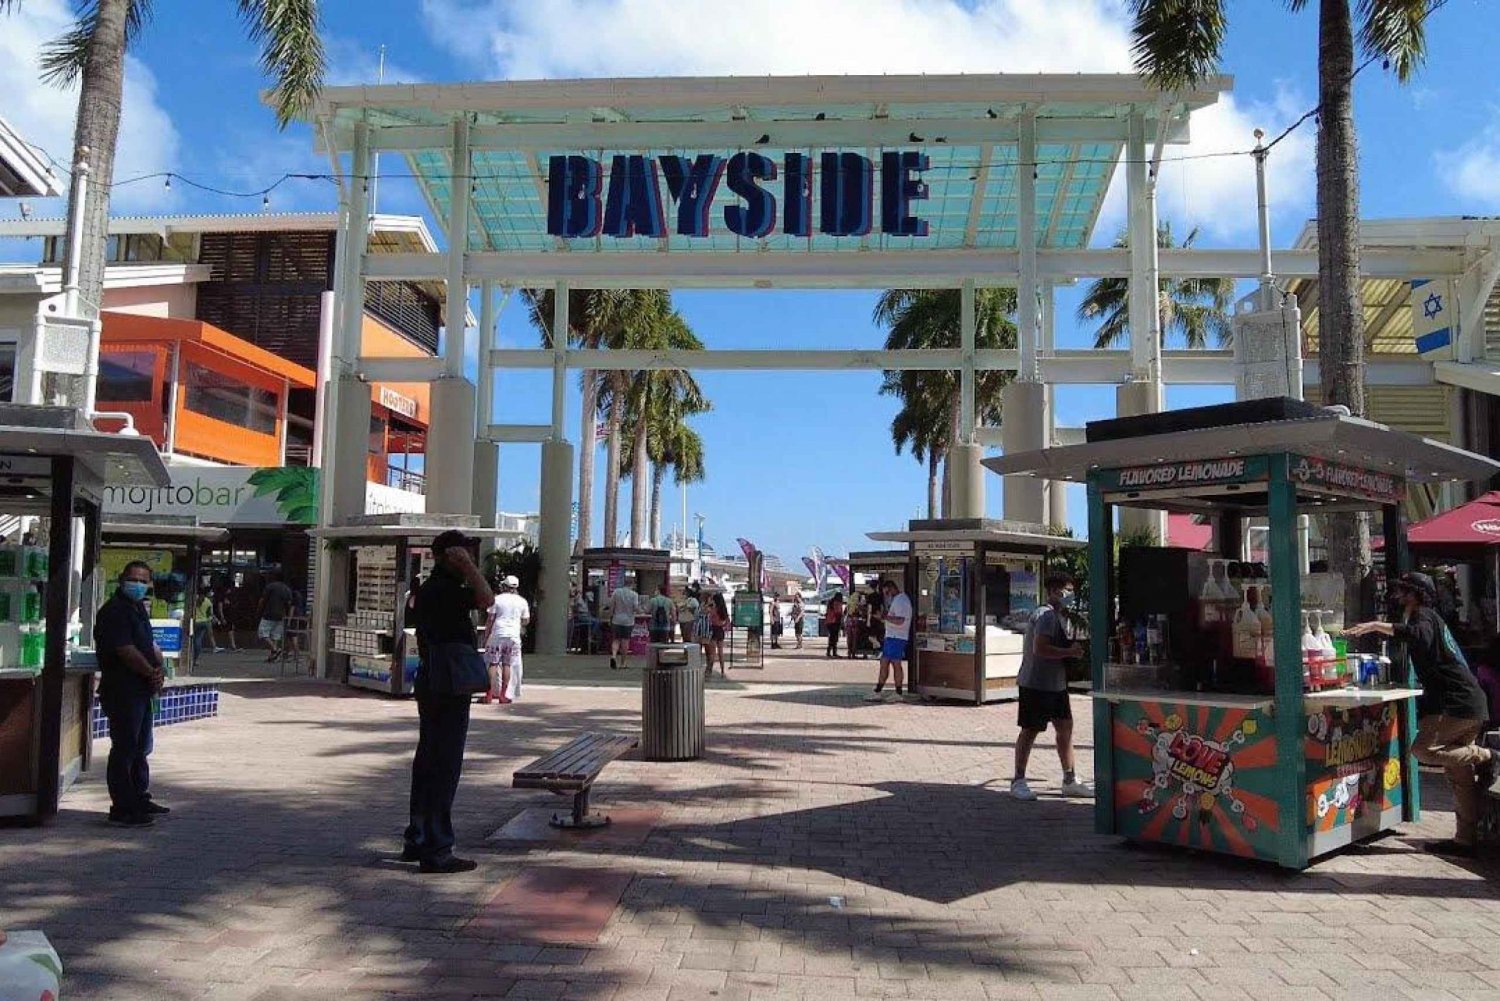 Miami: Biscayne Bay båtkryssning med transport inkluderad